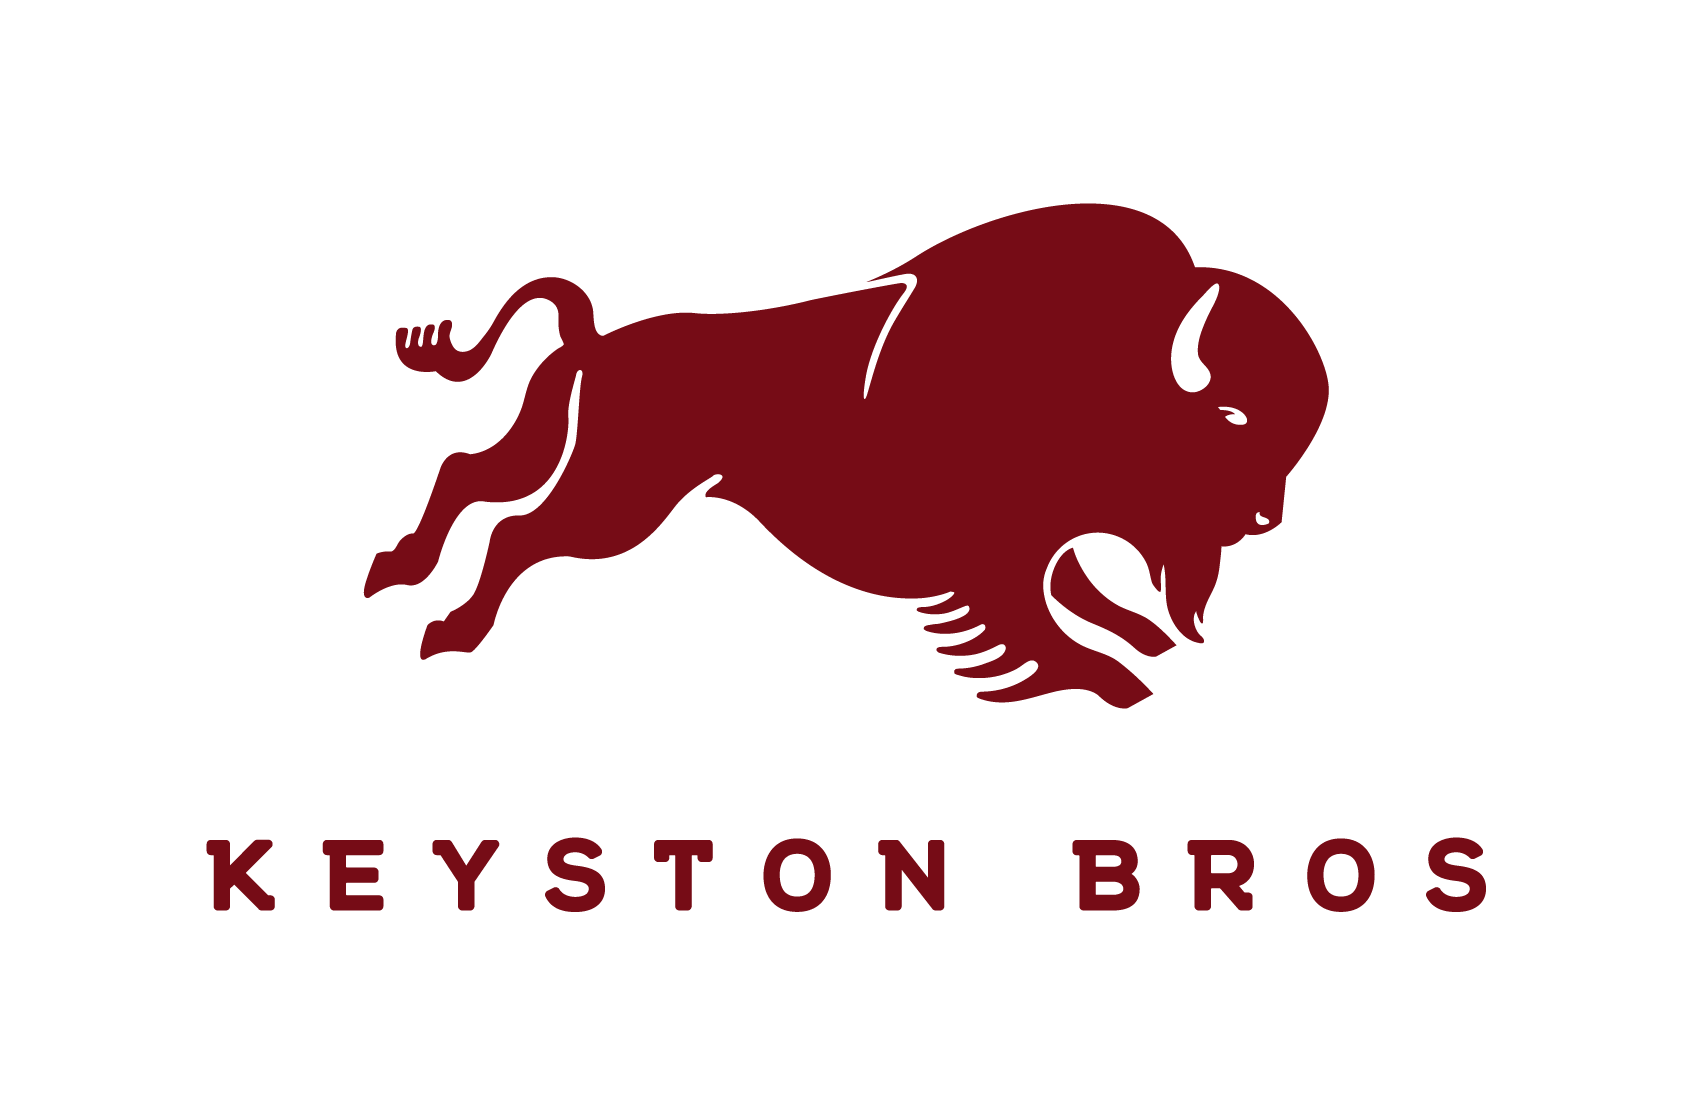 Who is Keyston Bros?